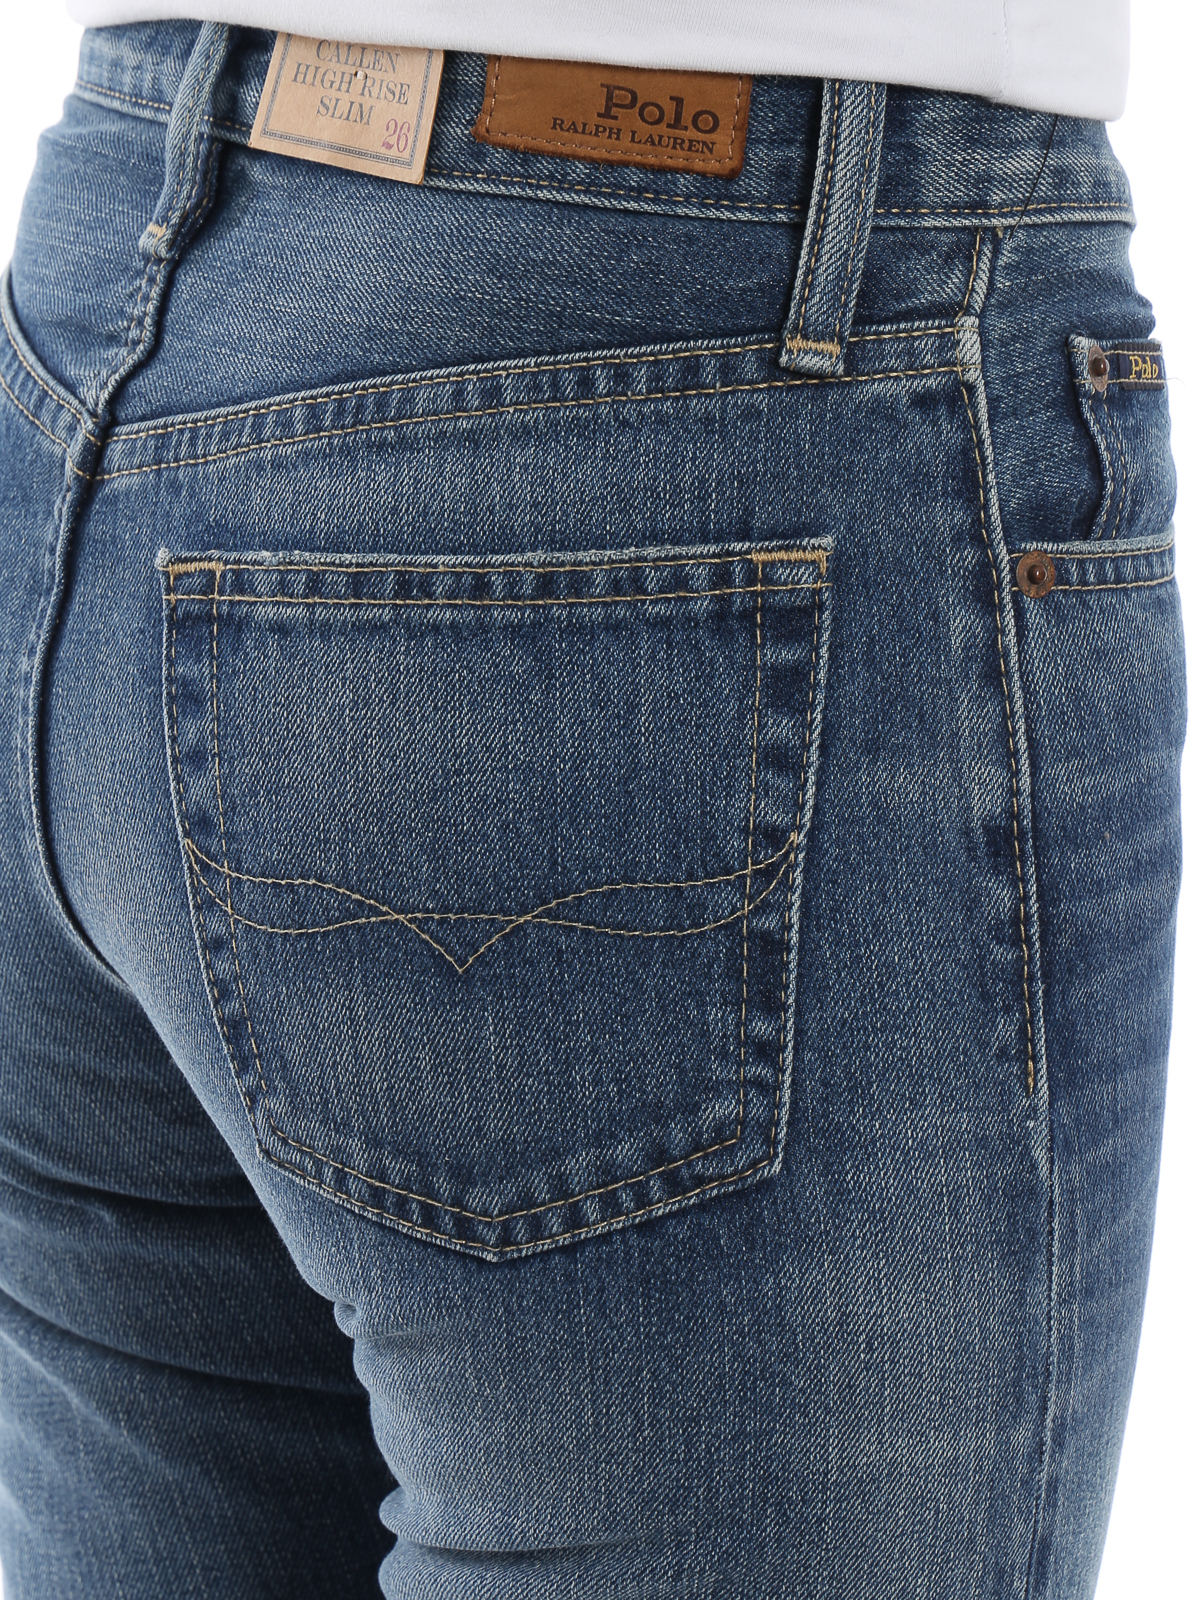 The Callen high rise slim jeans 